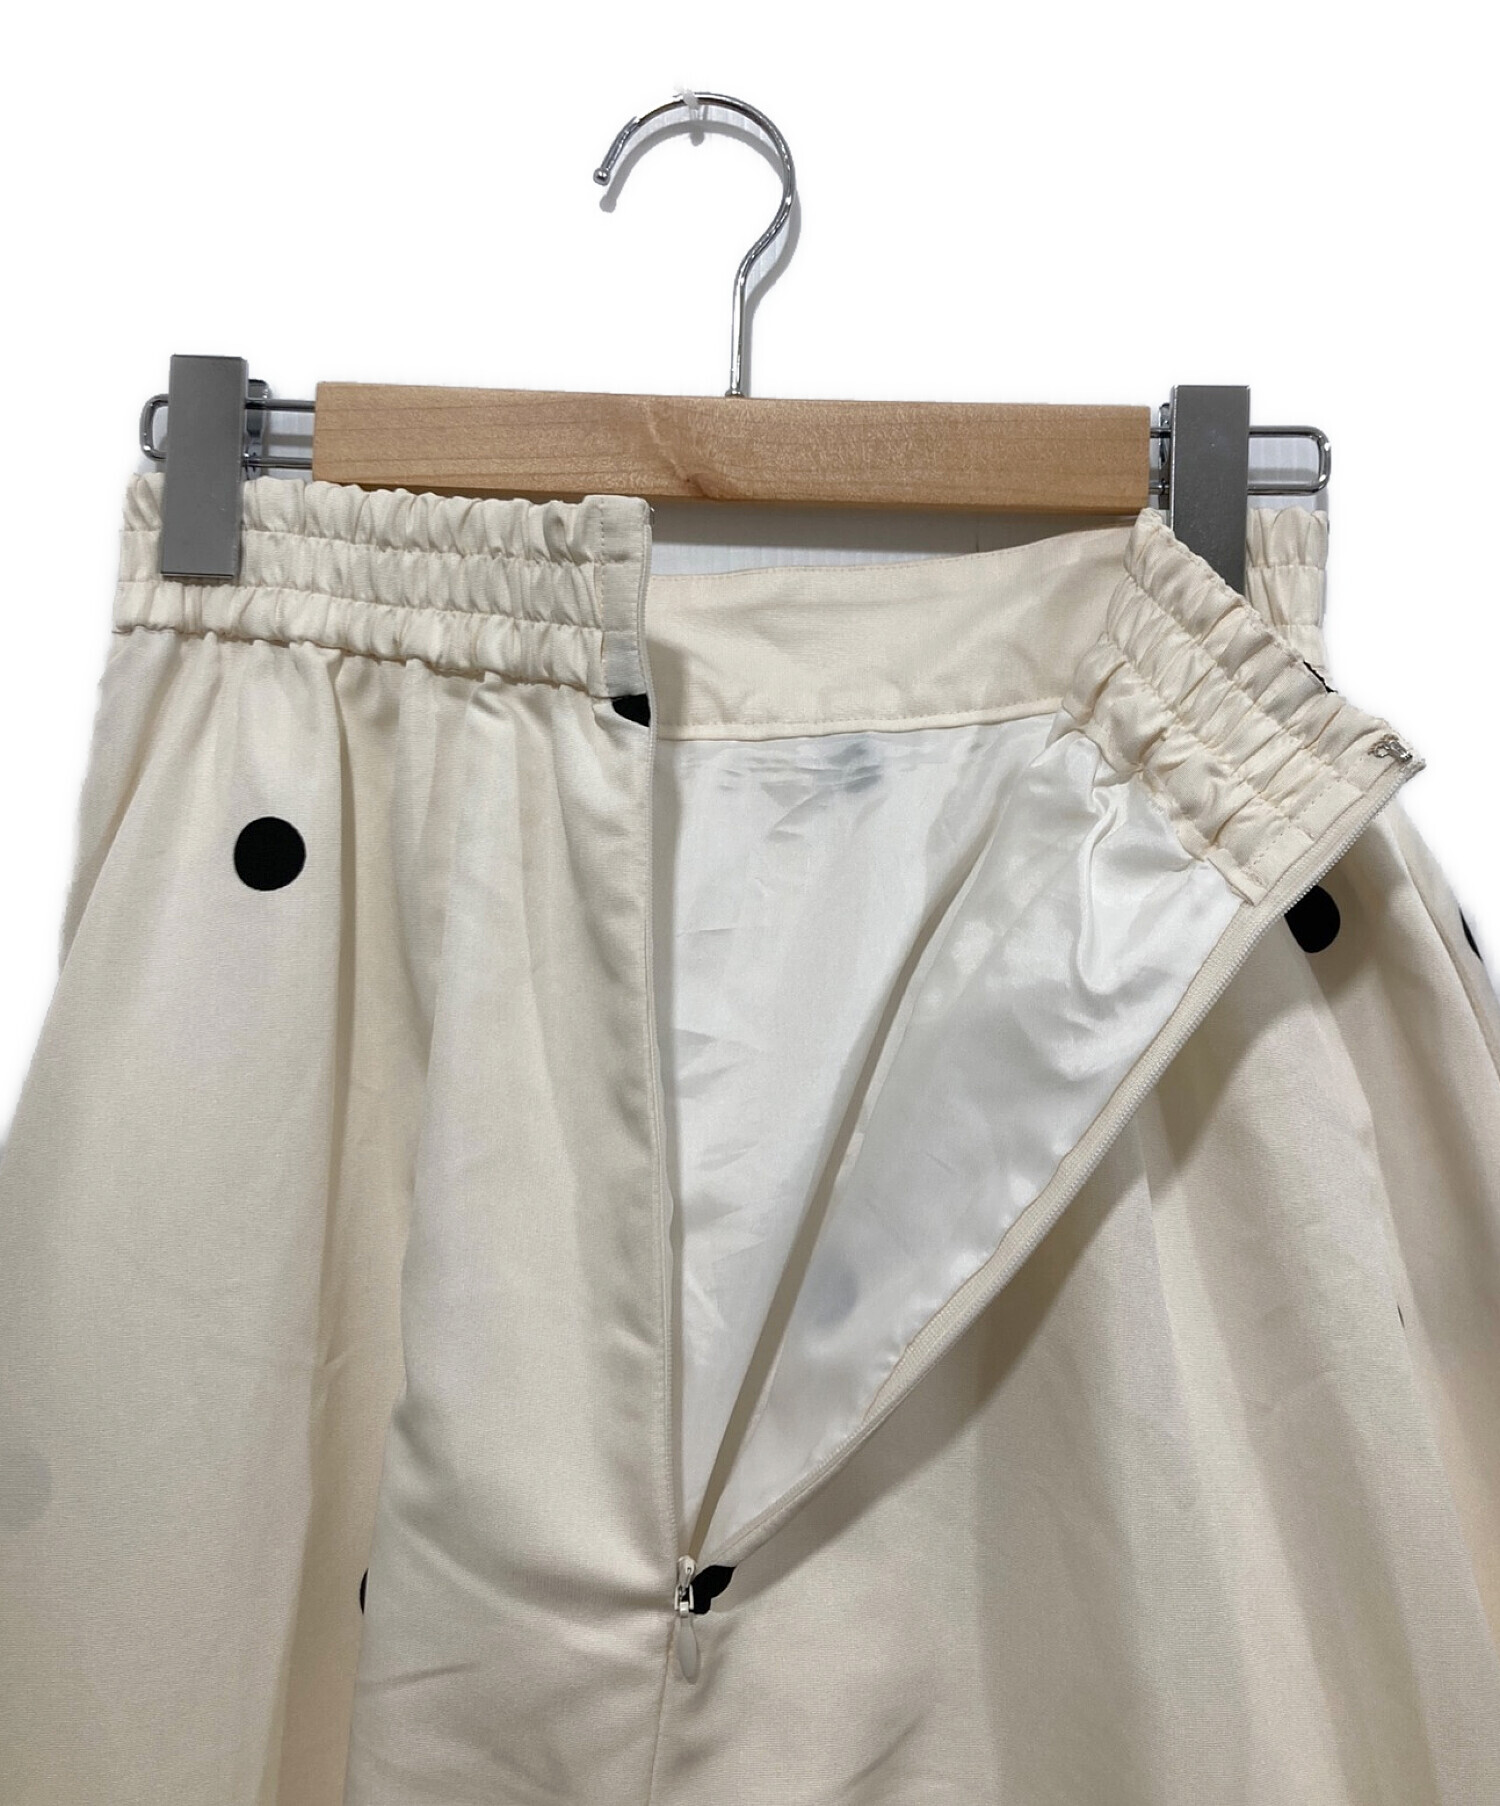 CADUNE (カデュネ) ドット切り替えスカート ホワイト サイズ:36